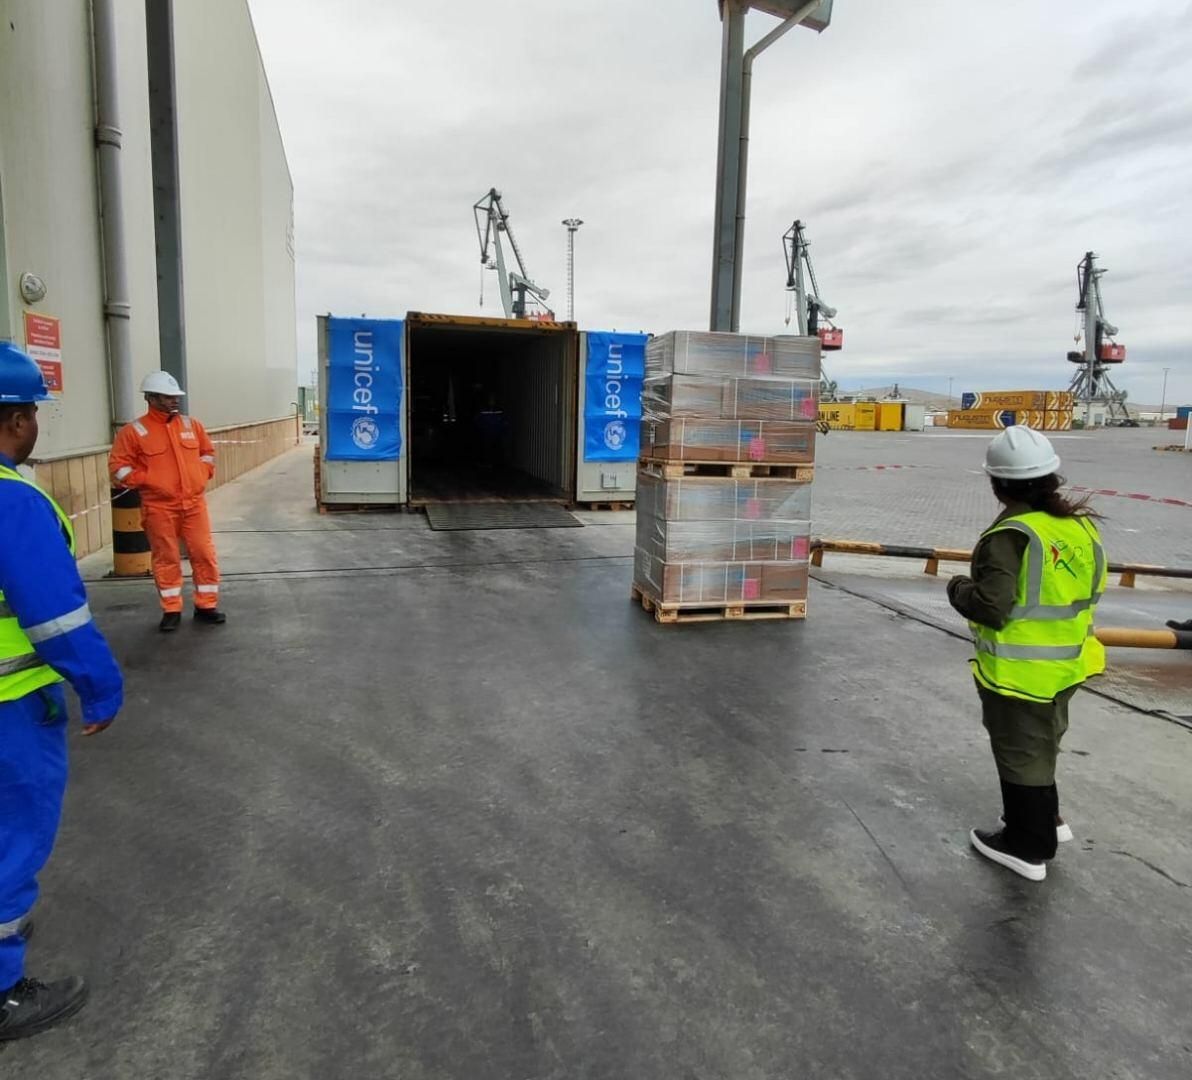 Baku port receives humanitarian aid for Afghanistan [PHOTO]